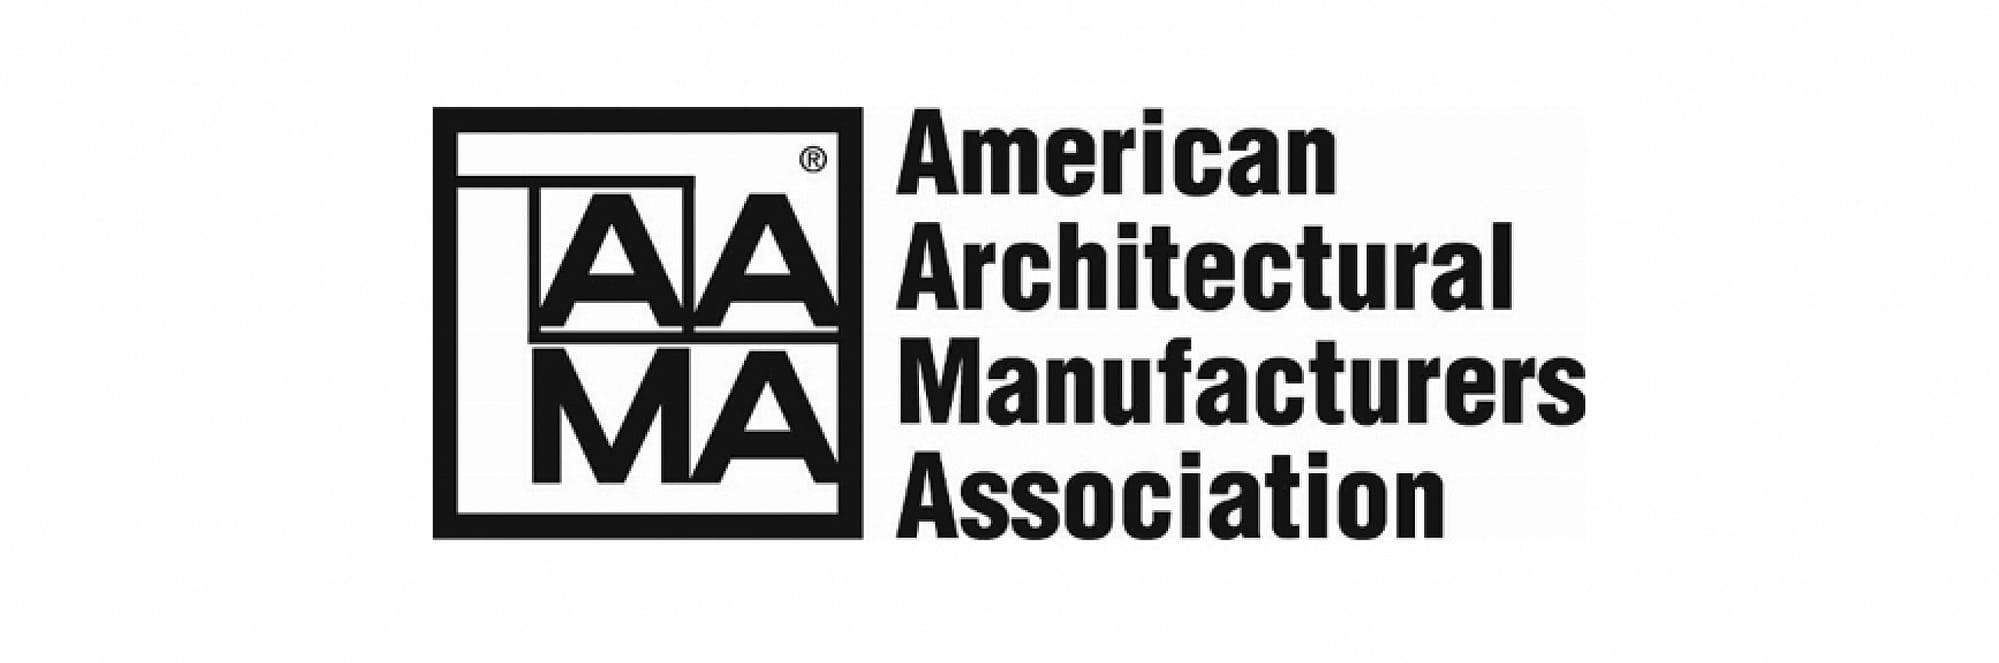 American Architectural Manufacturers Association logo